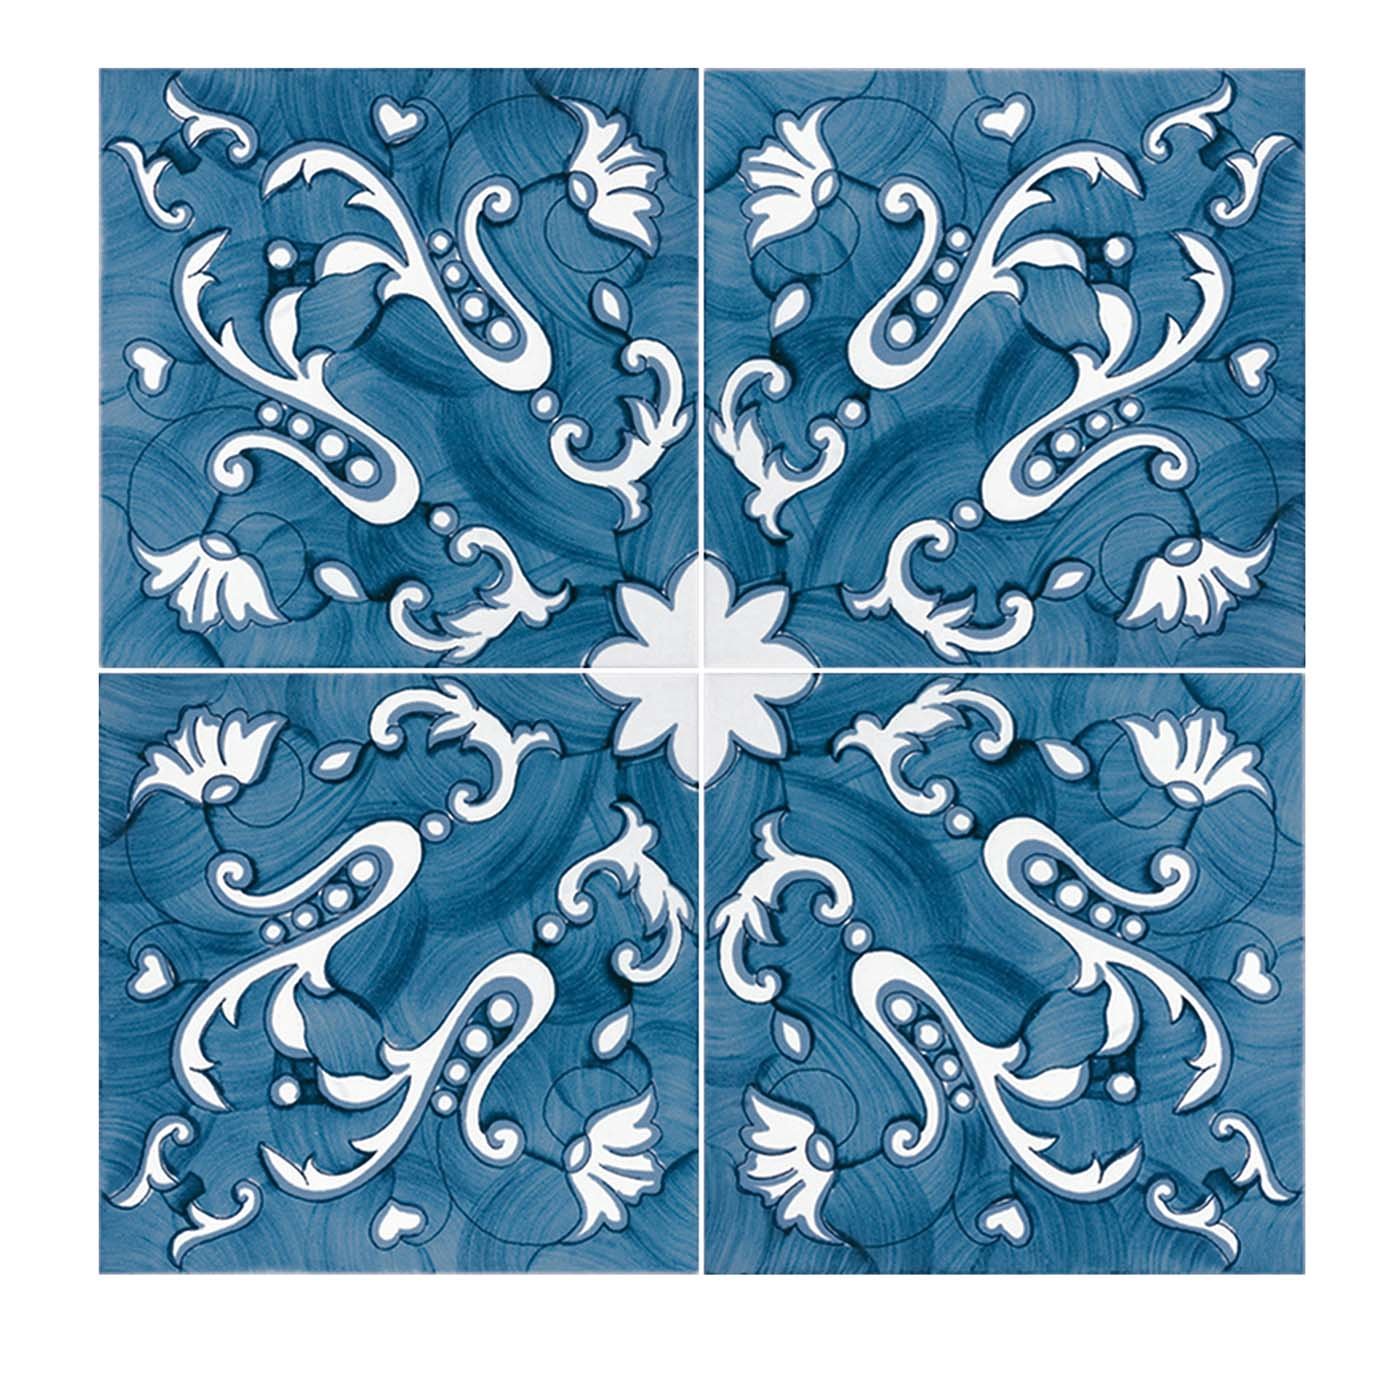 Set of 25 Lobra Turquoise Tiles Fiori Scuri Collection - Main view